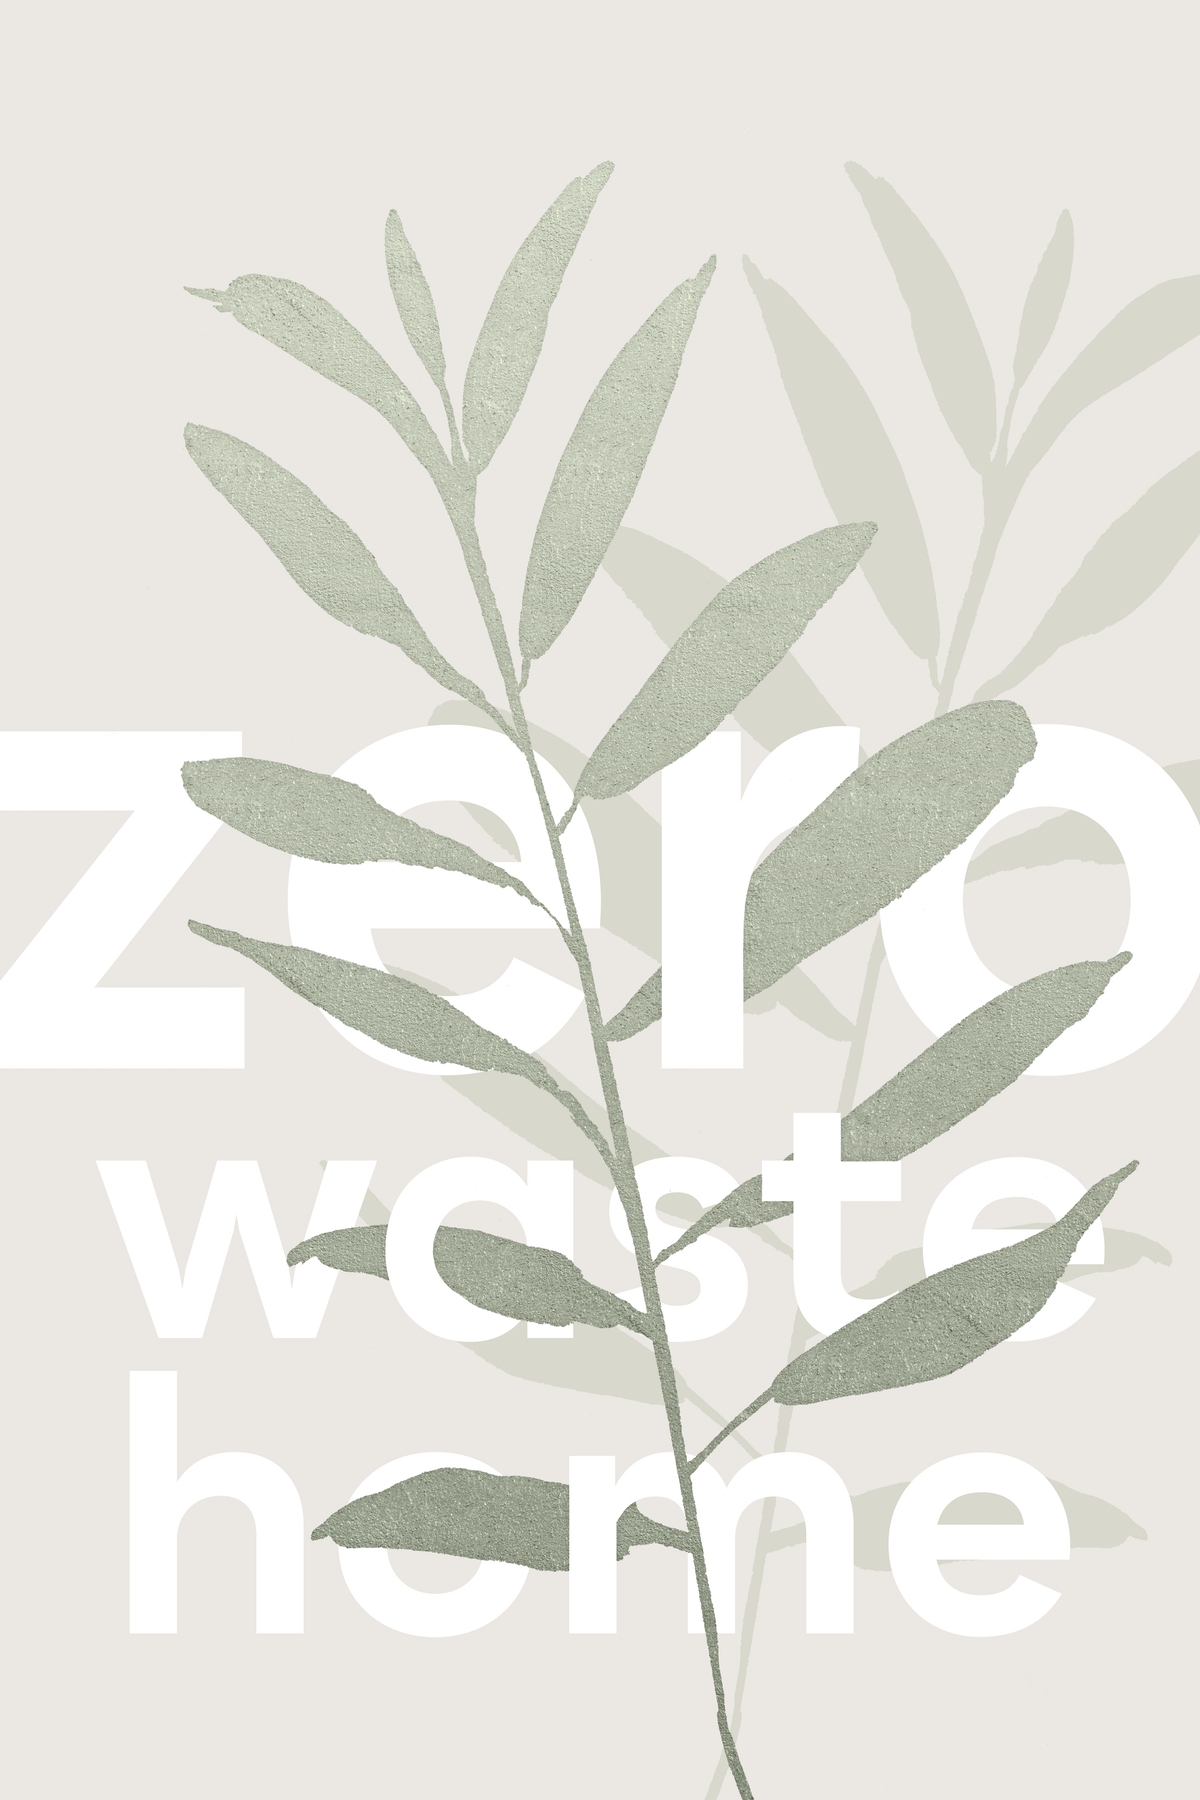 zero waste icons | Cute desktop wallpaper, Icon design, Zero waste